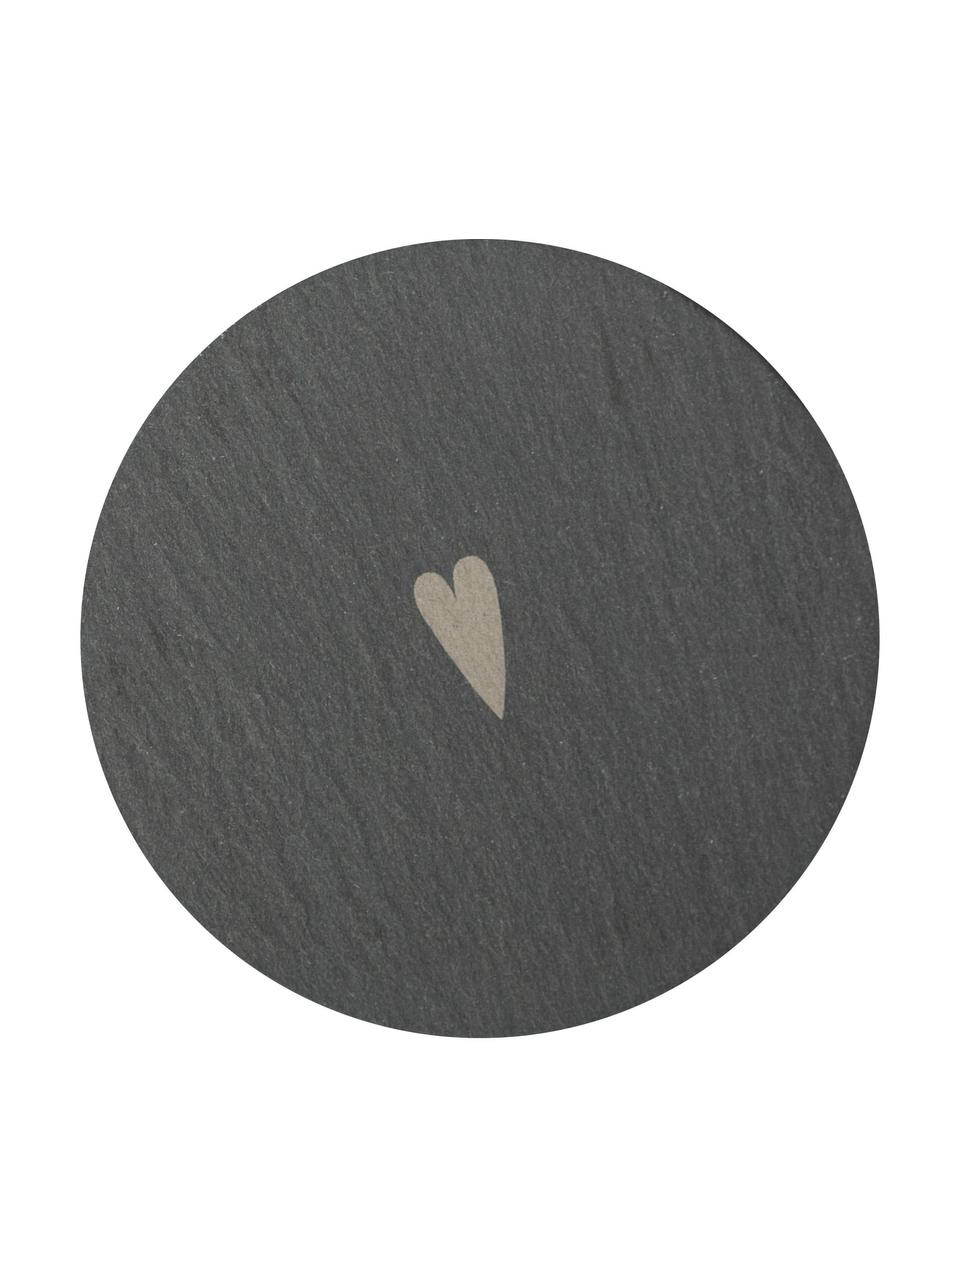 Onderzetter Heart uit leisteen, 2 stuks, Leisteen, Donkergrijs, Ø 10 cm